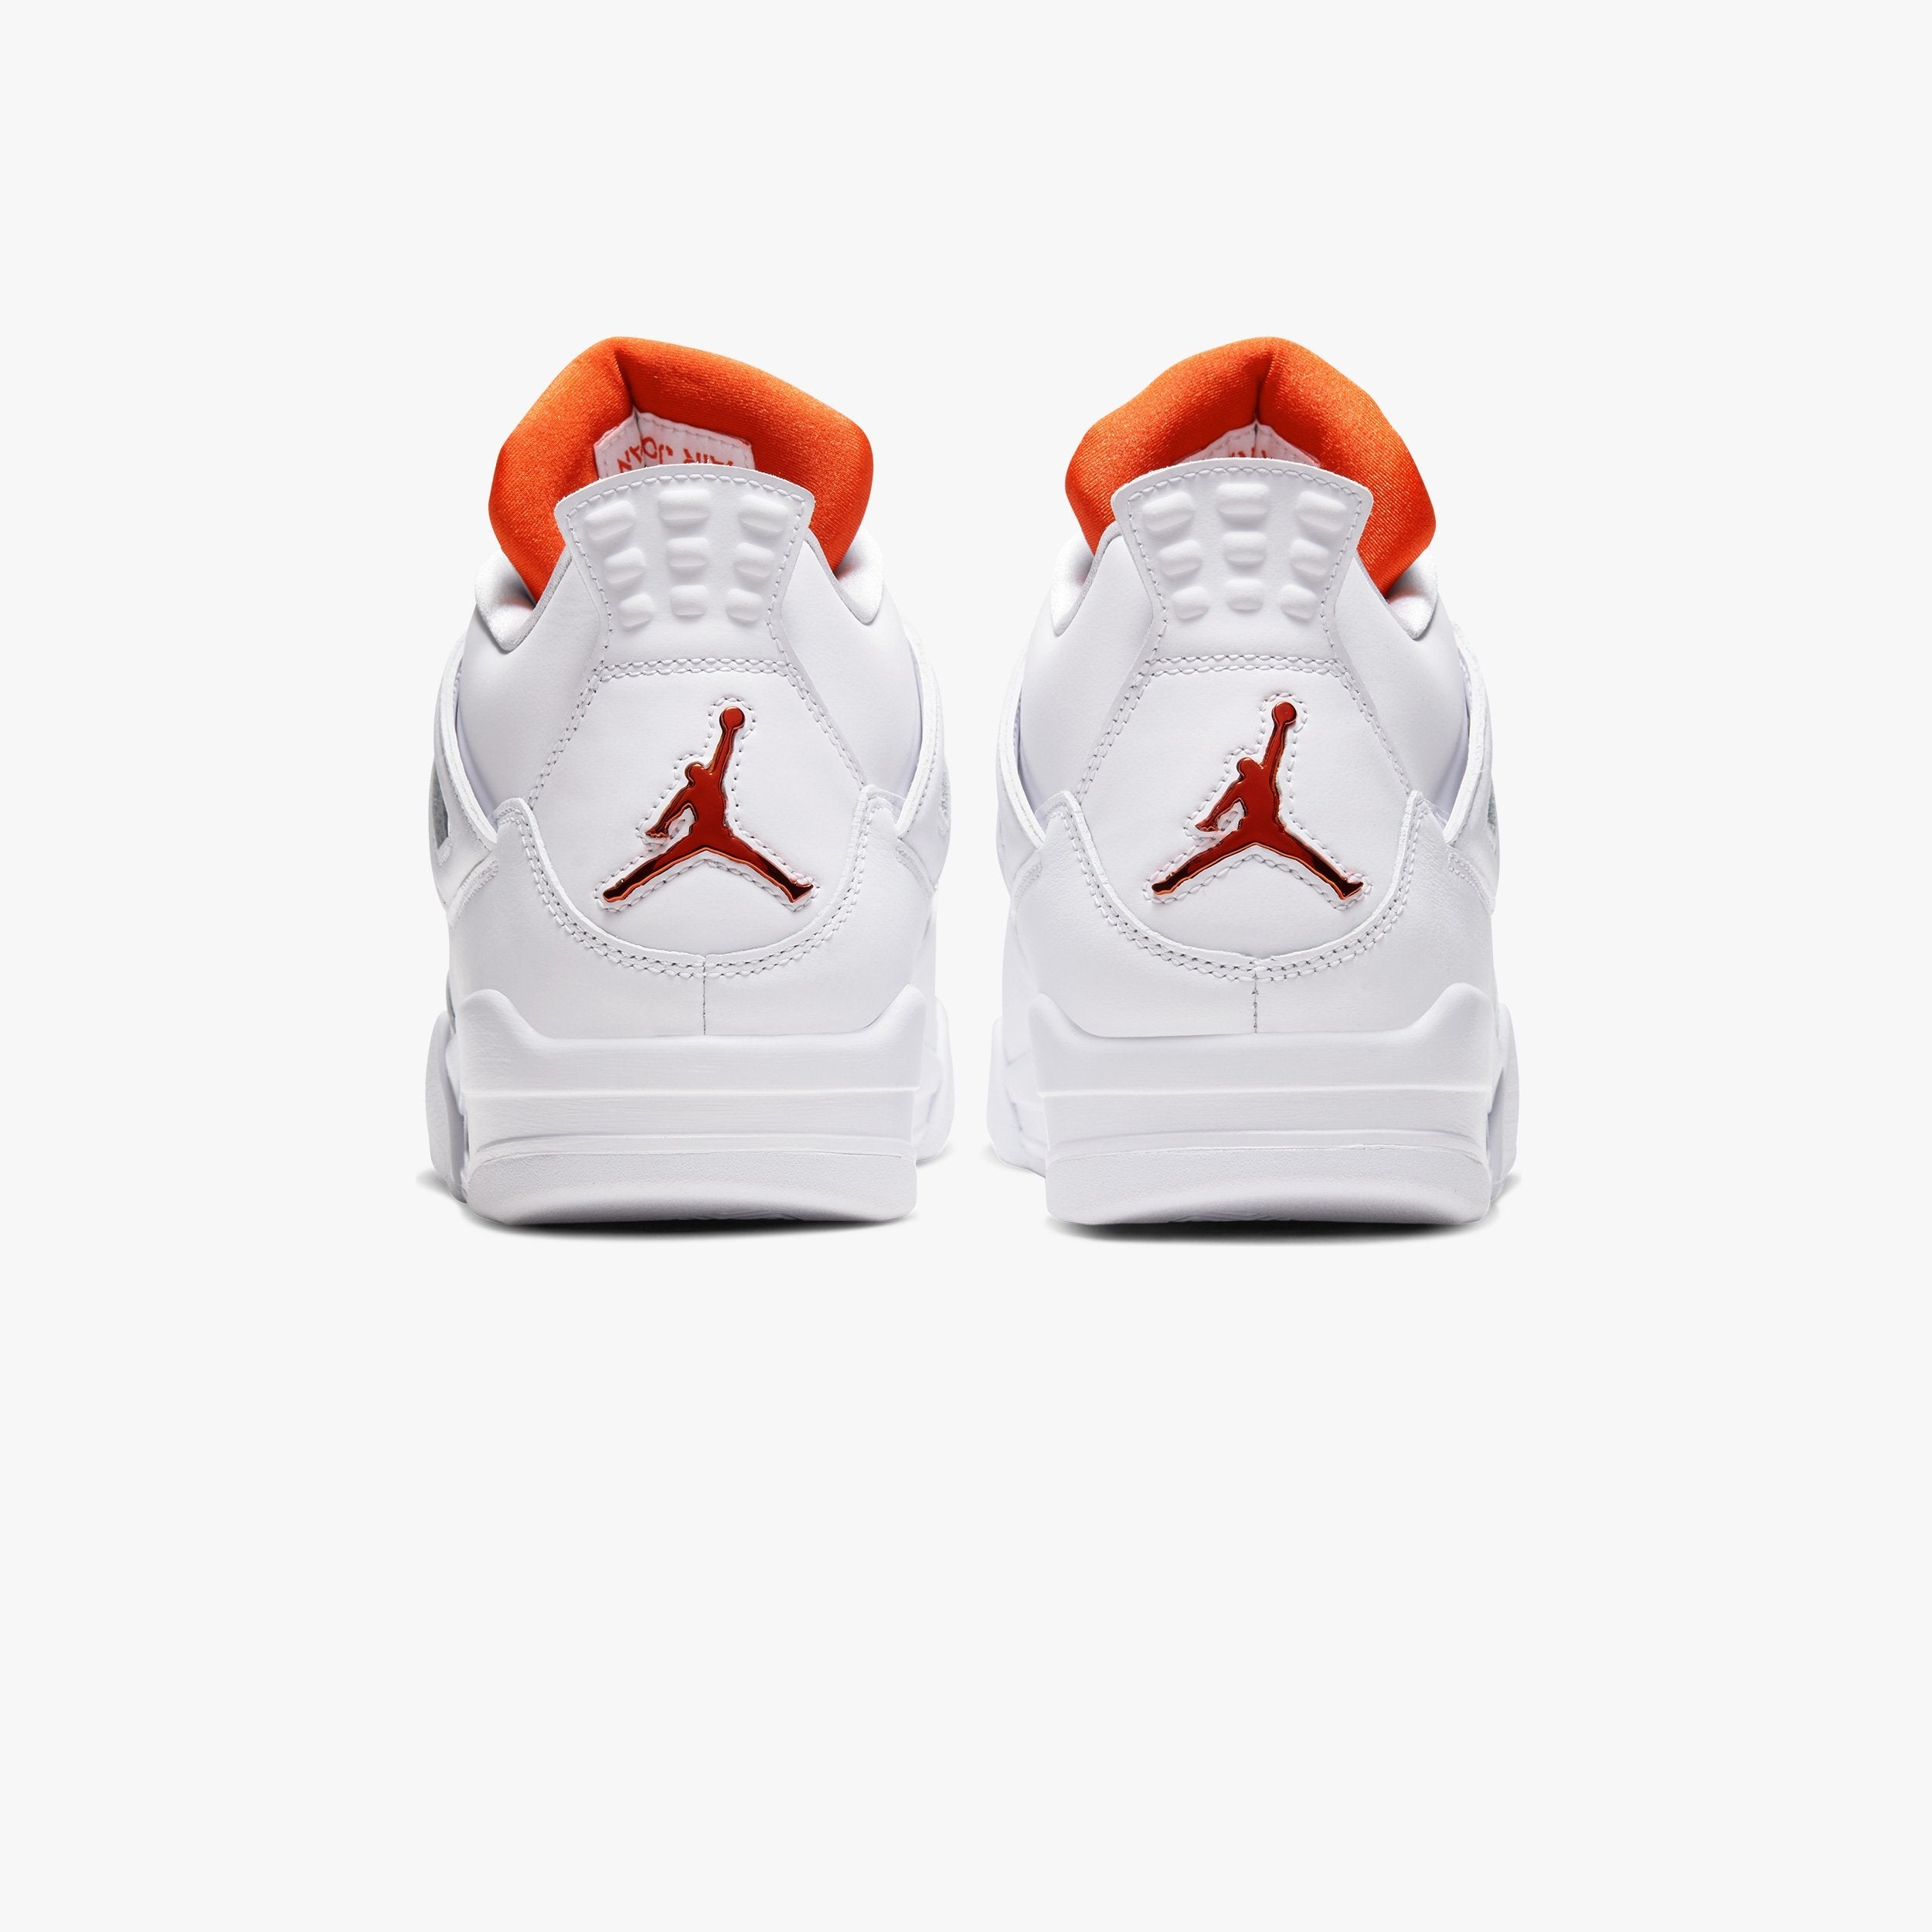 Air Jordan 4 Retro " Metallic Orange "